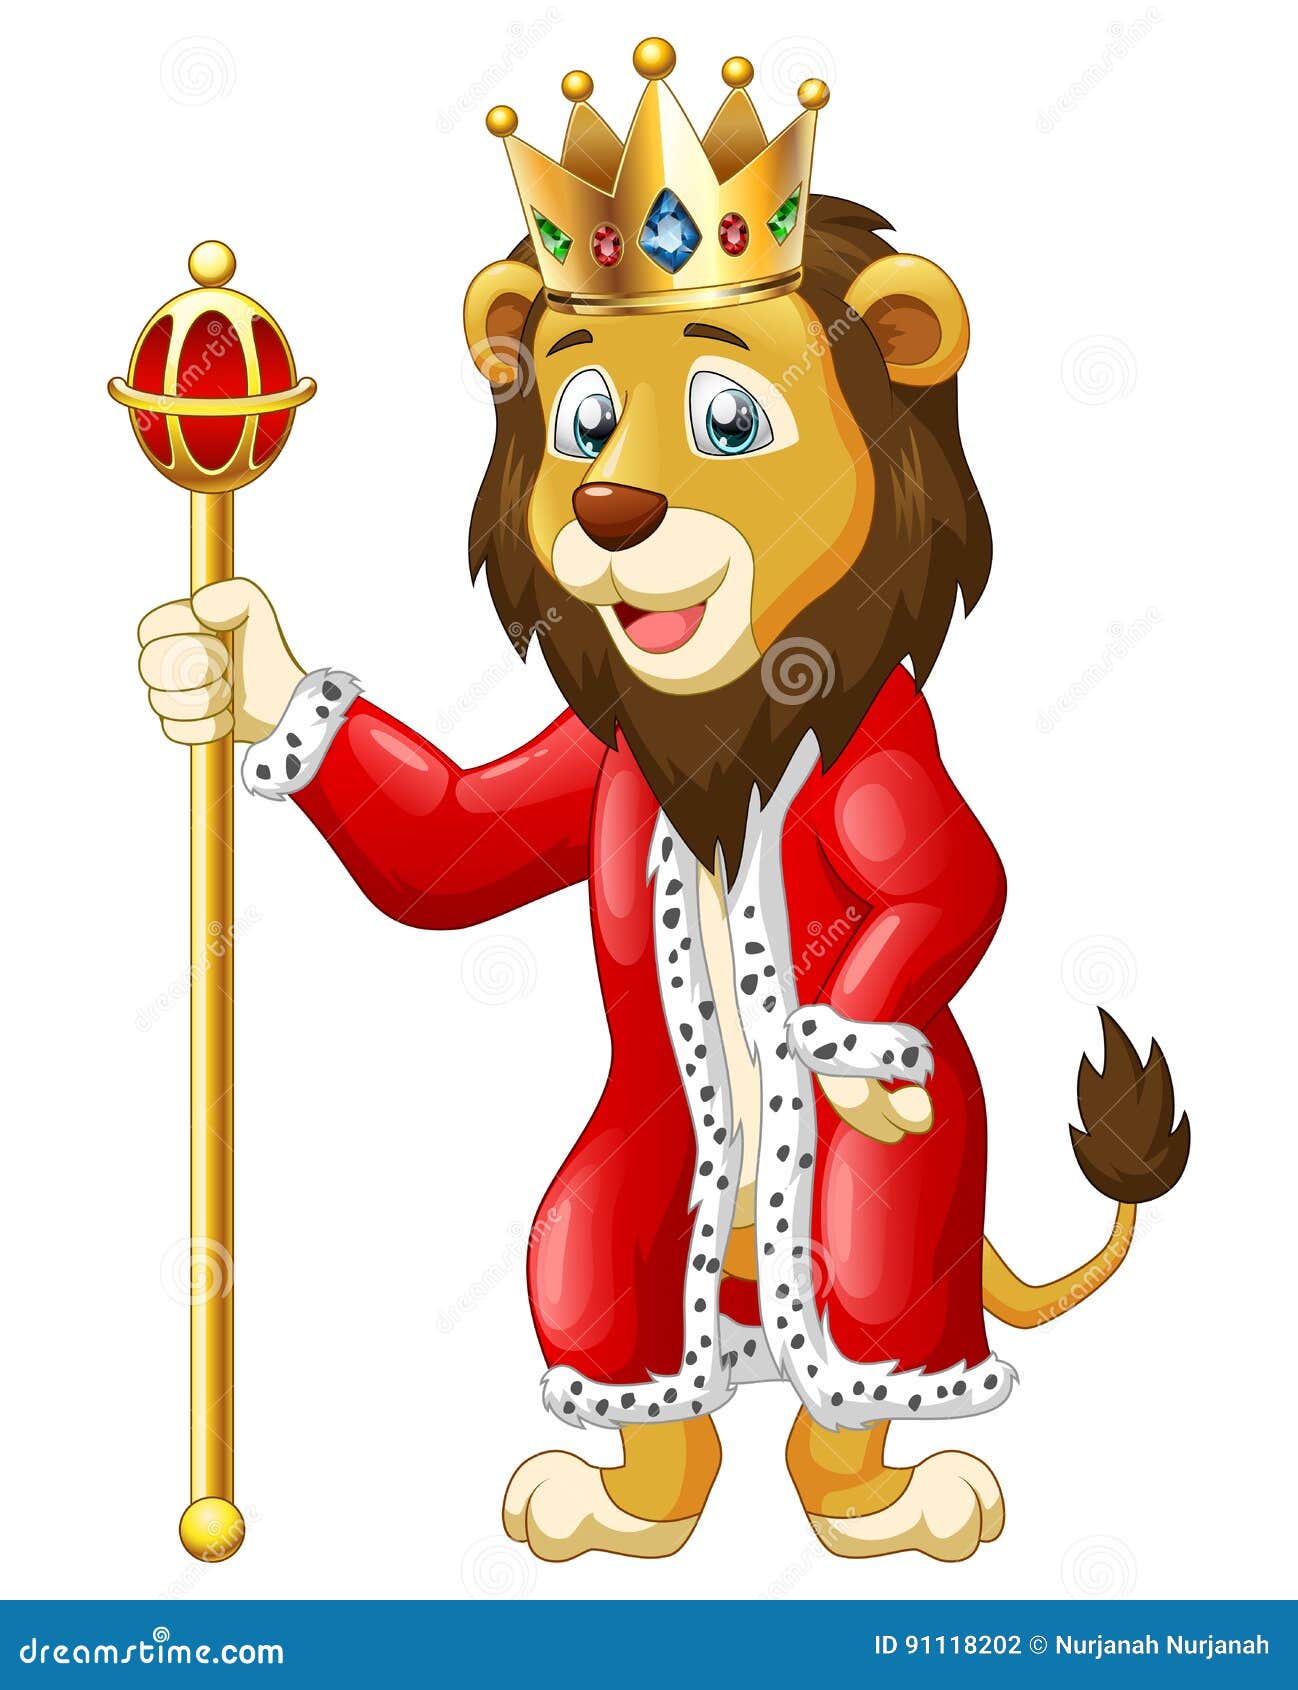 Cute lion king cartoon stock vector. Illustration of walking - 91118202